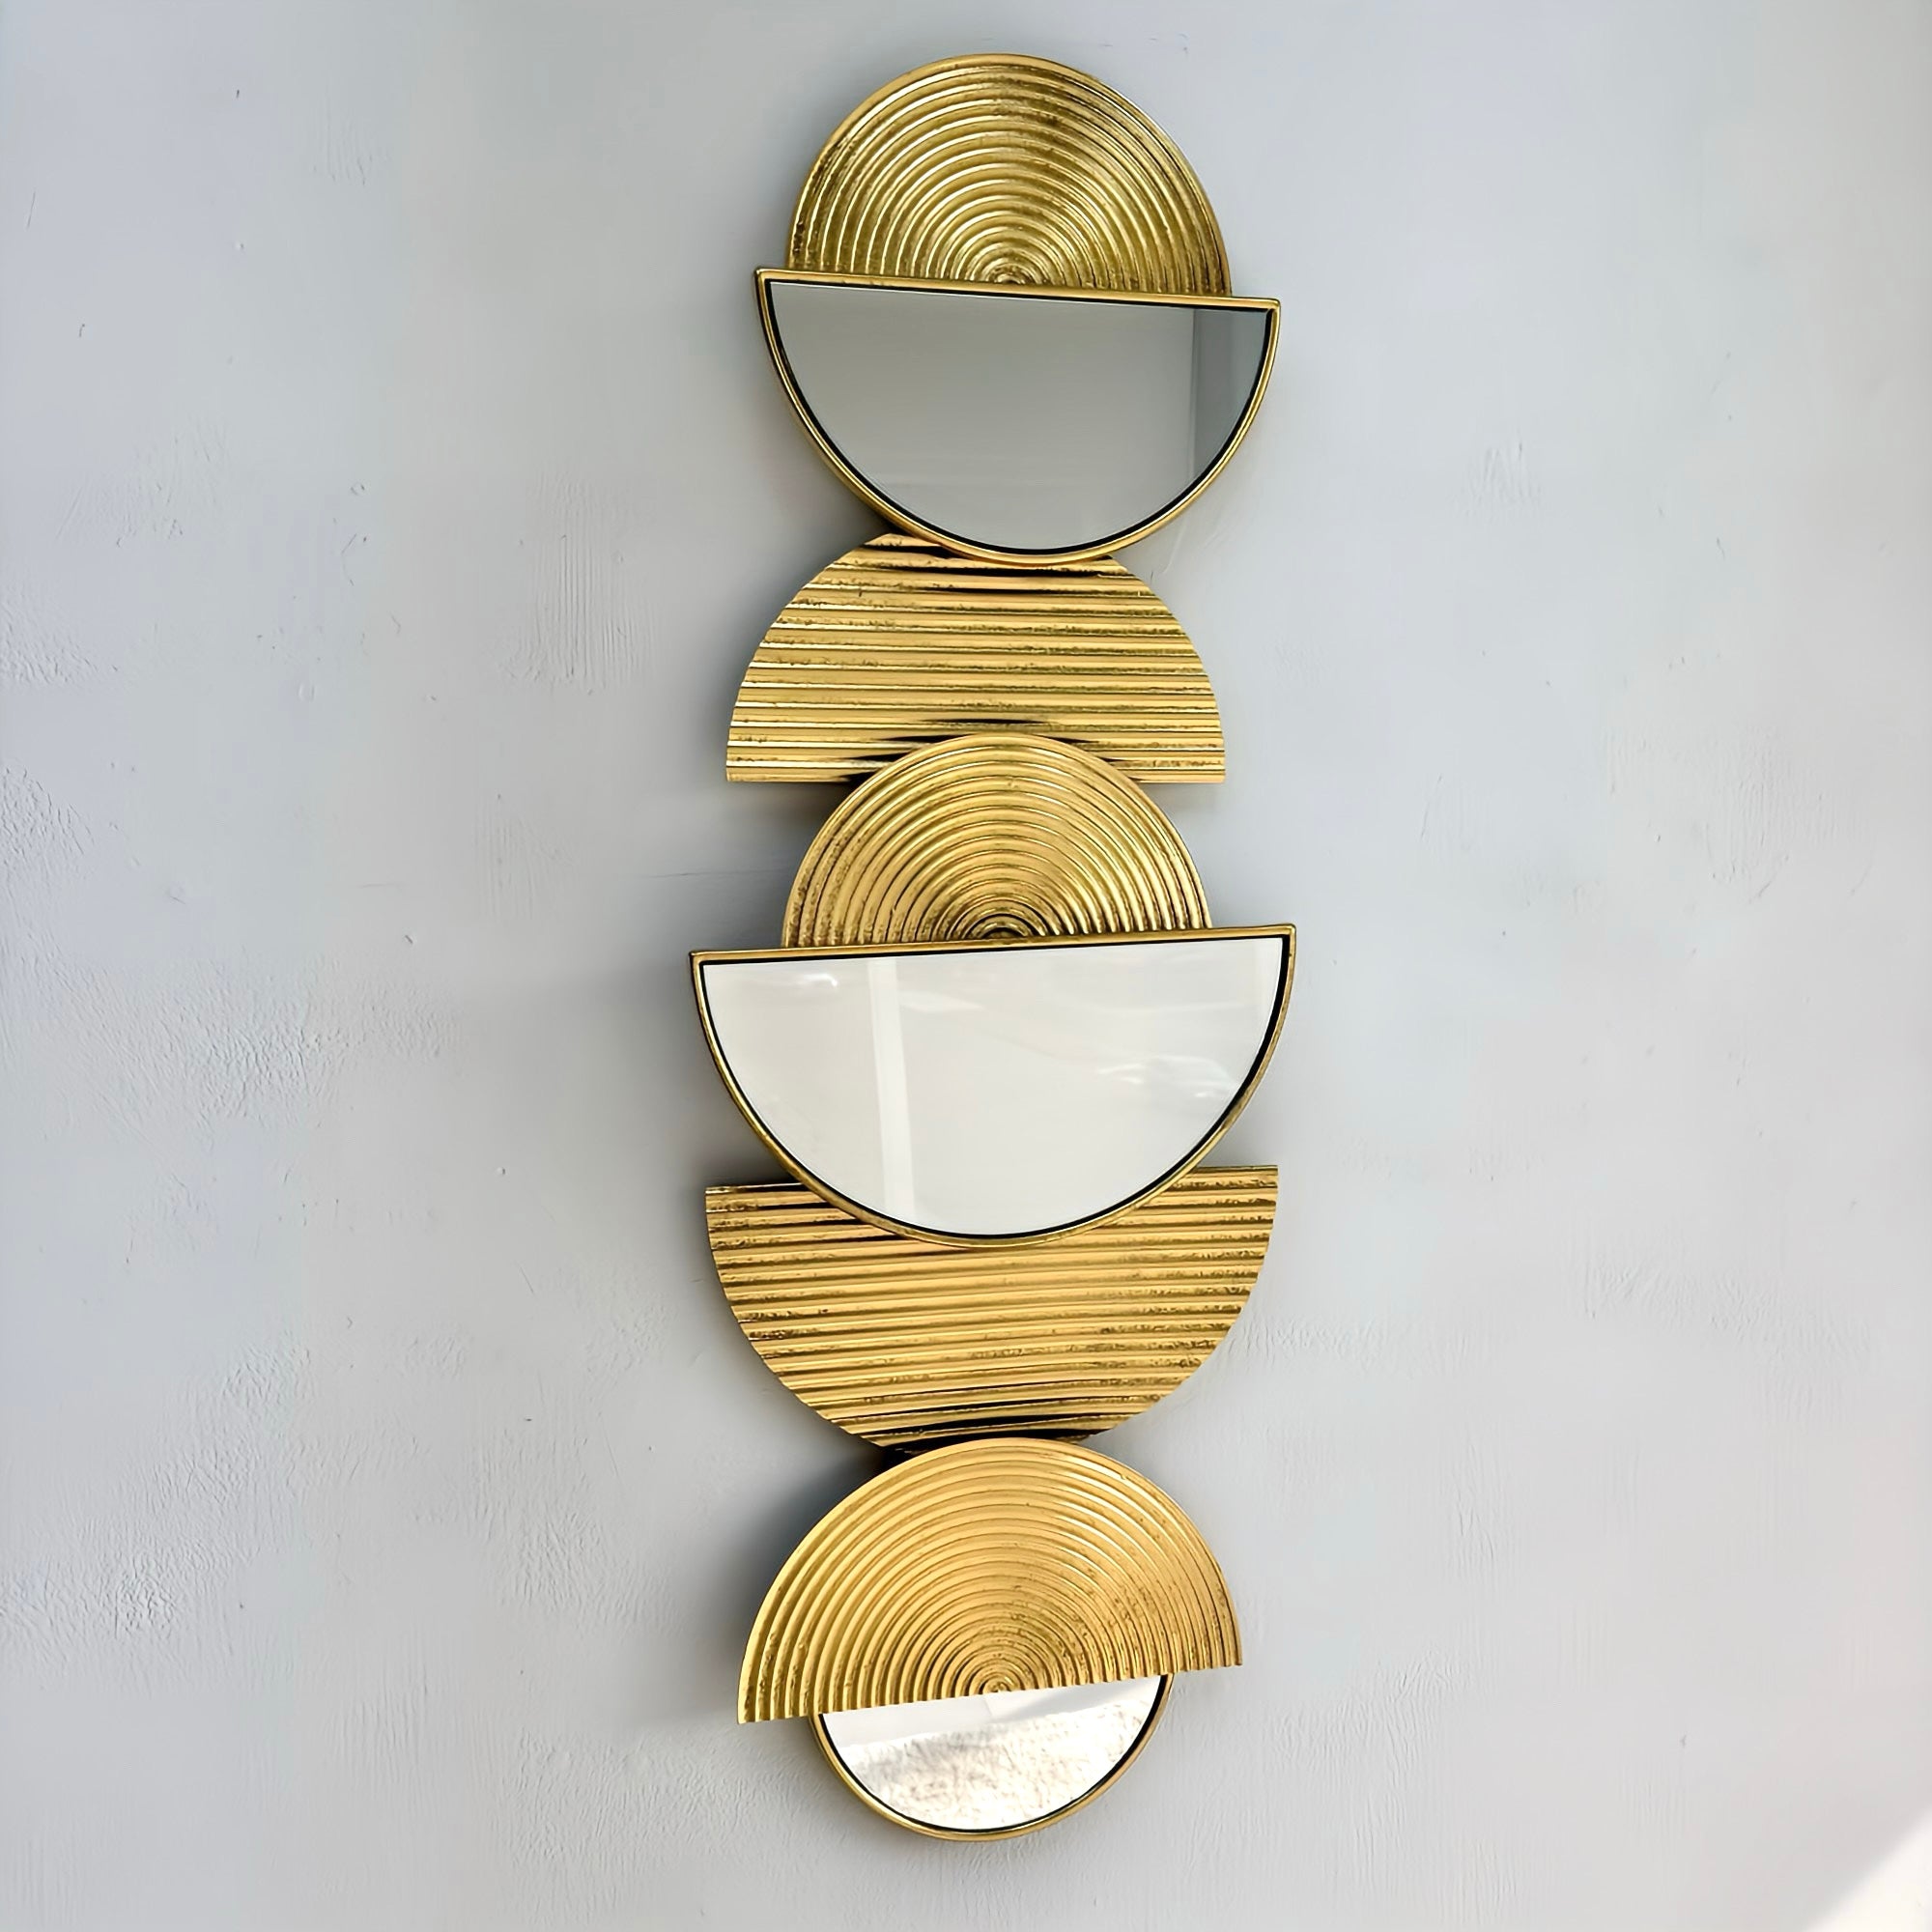 Geometric Golden Metal & Mirror Wall Art